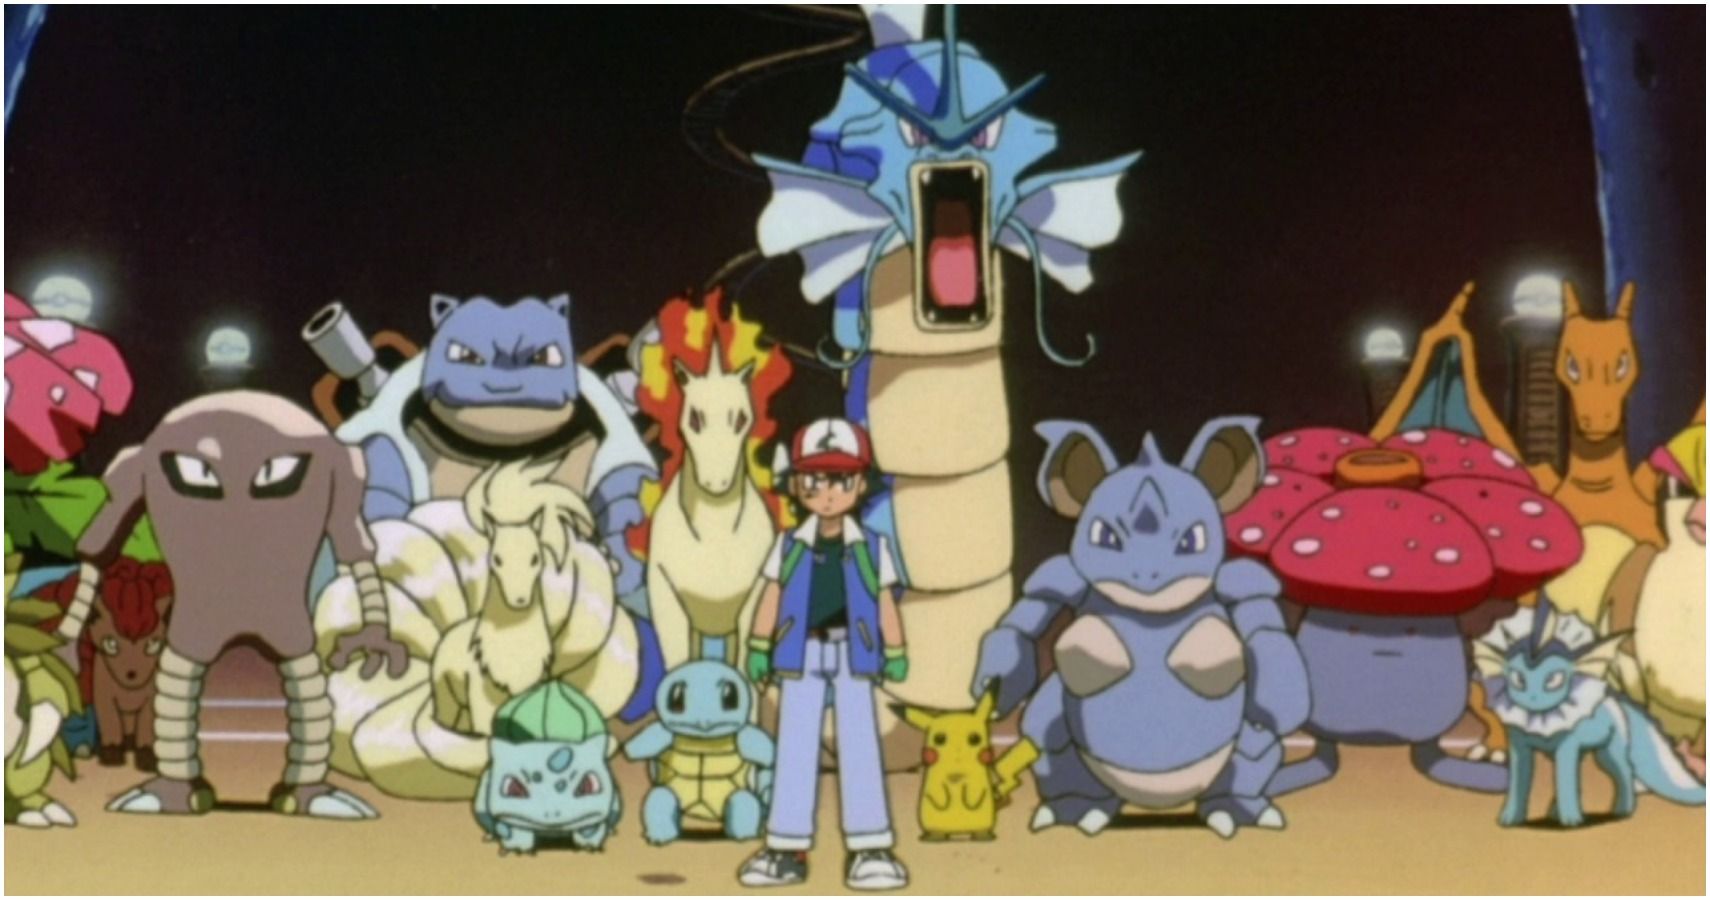 Pokémon For Nintendo Switch May Only Contain The Original 151 Pokémon